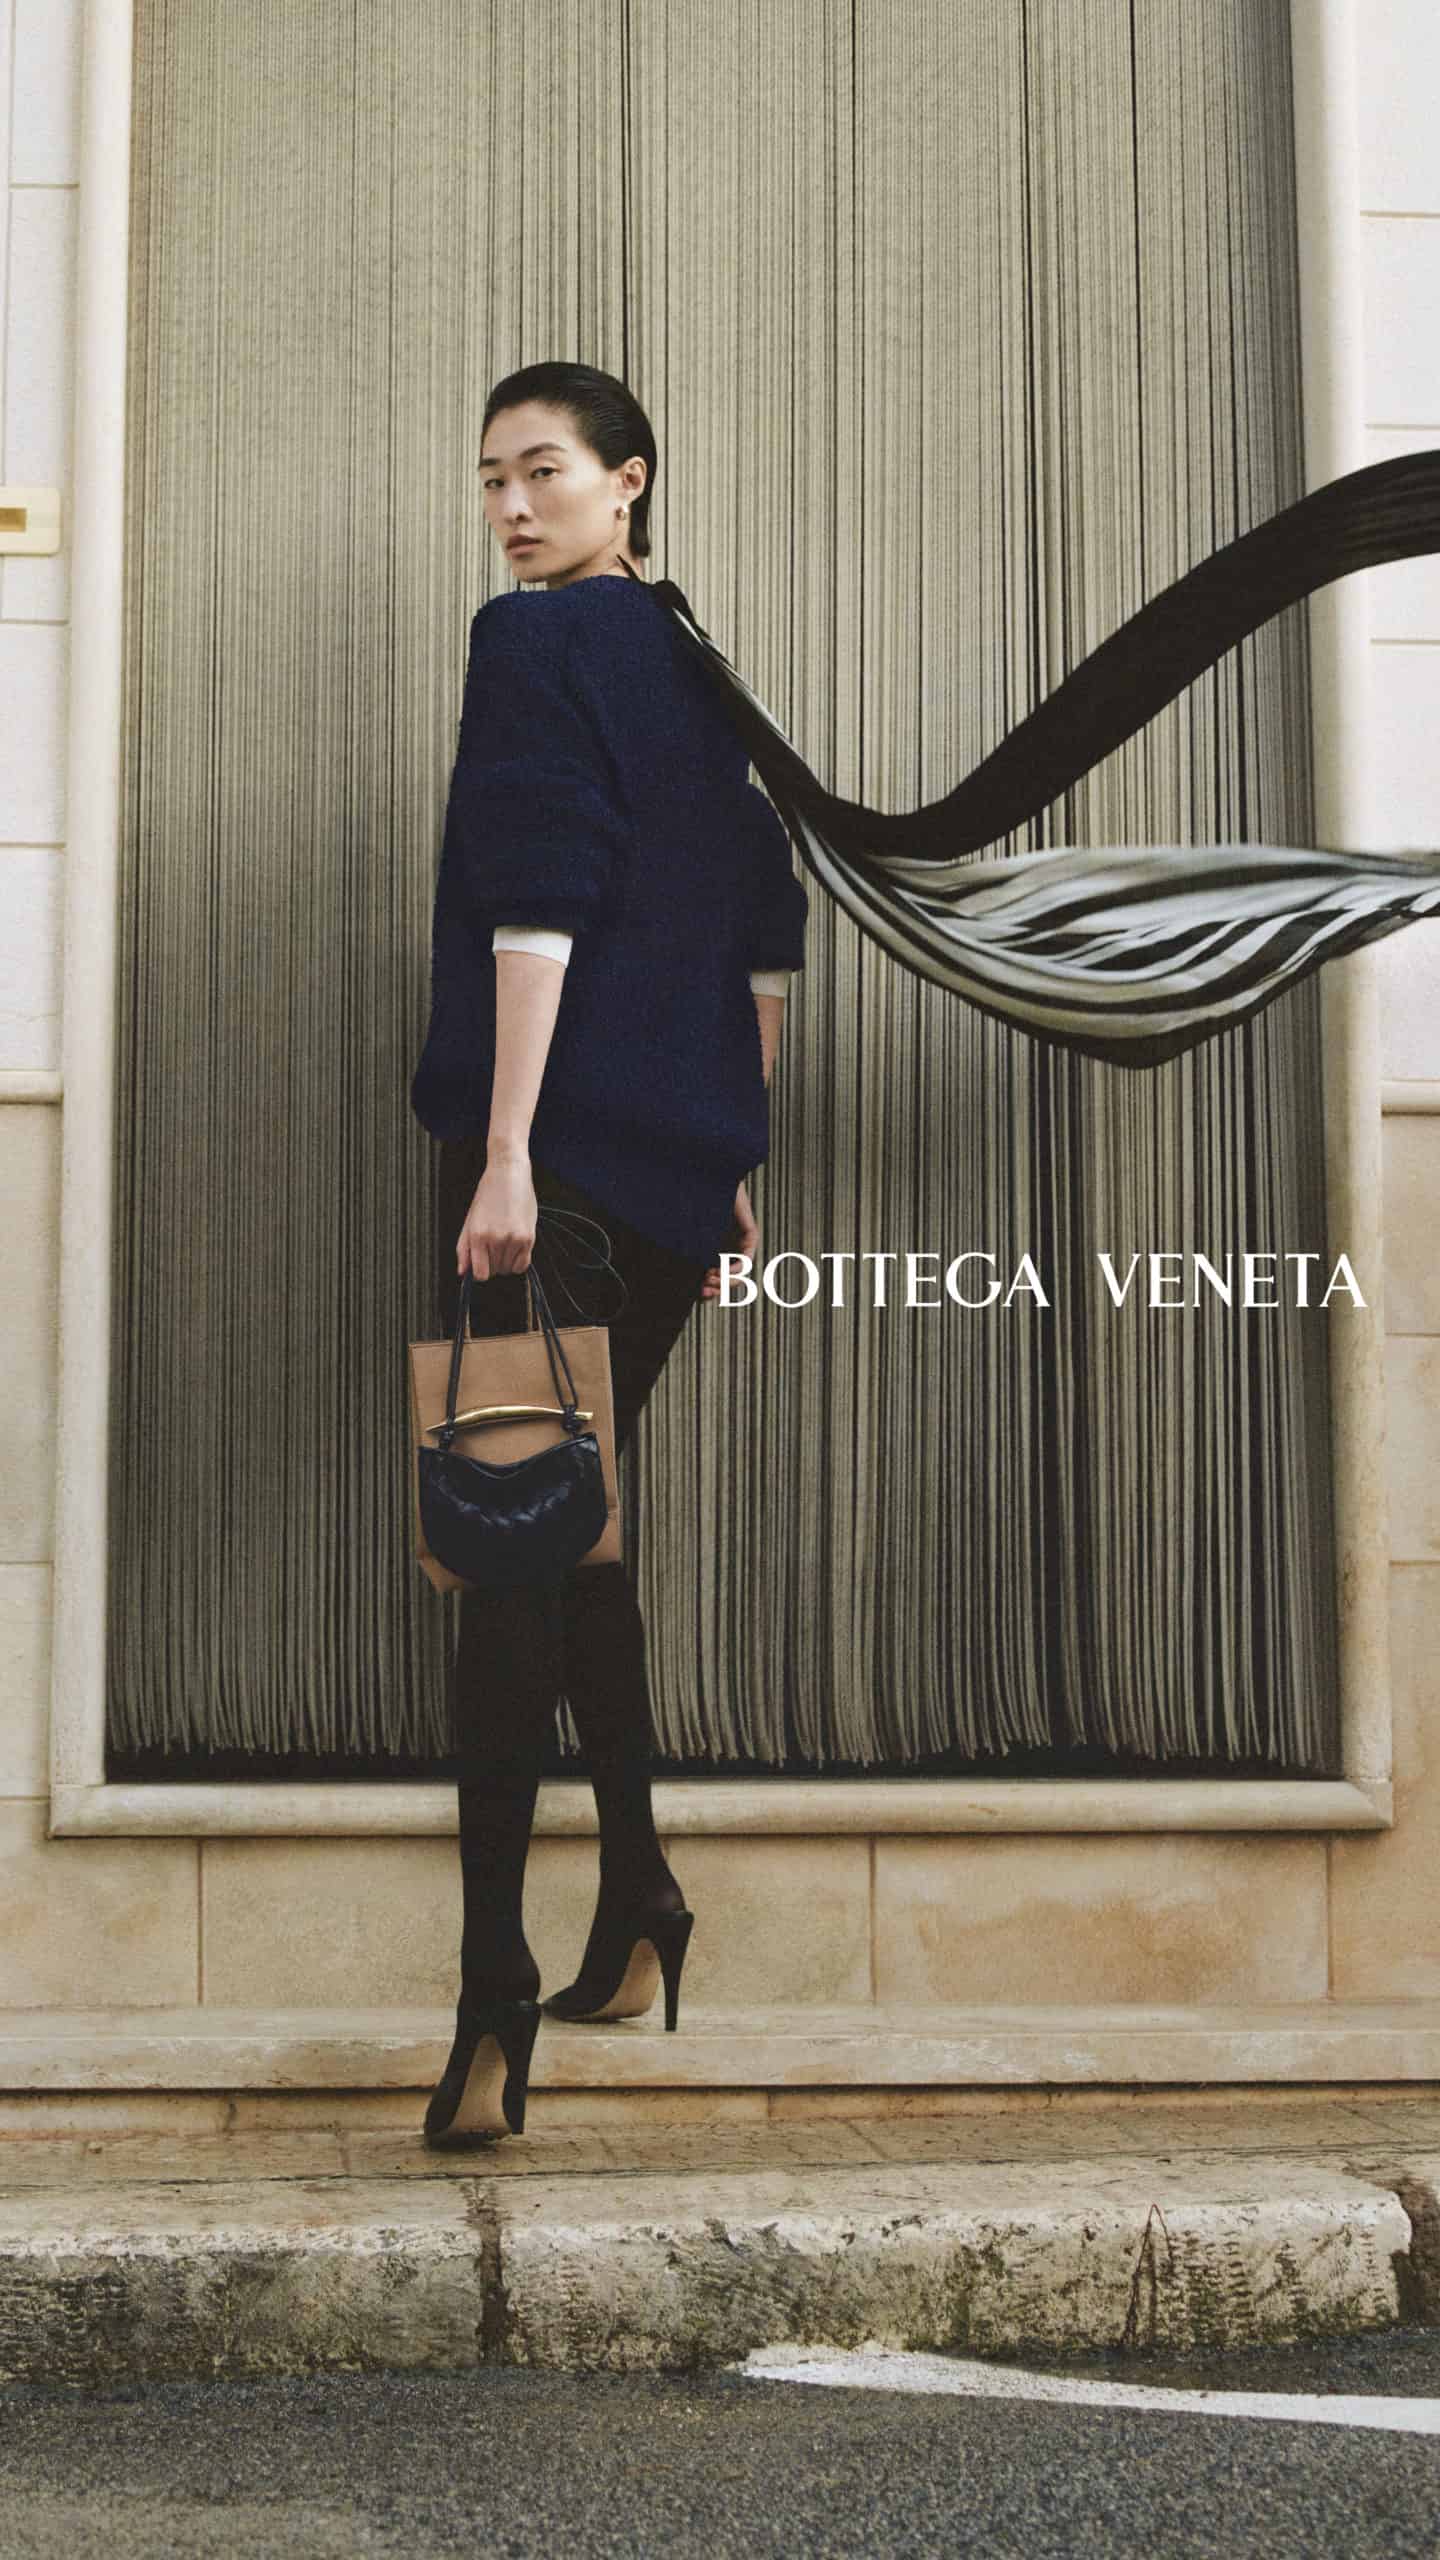 Bottega Veneta Presents Winter 2023 Campaign